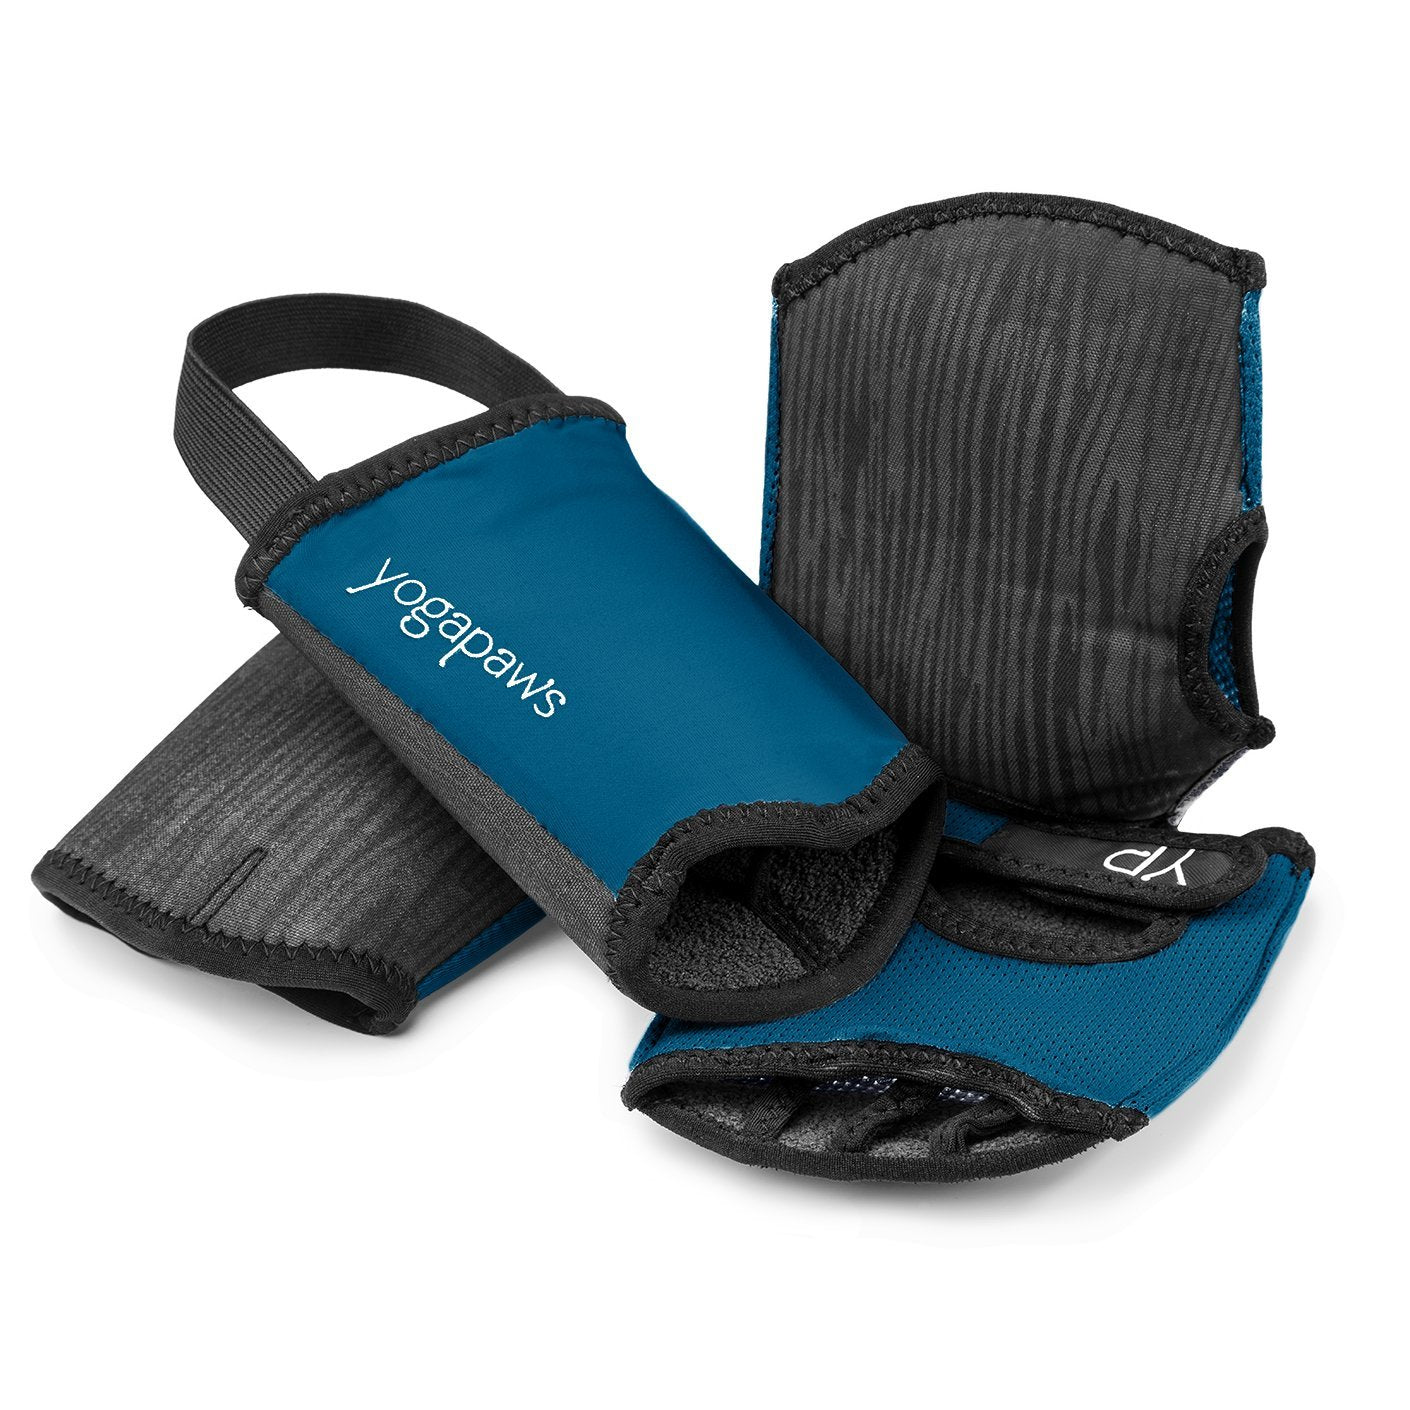 YogaPaws Yoga Socks and Gloves Full Set - YogaPaws